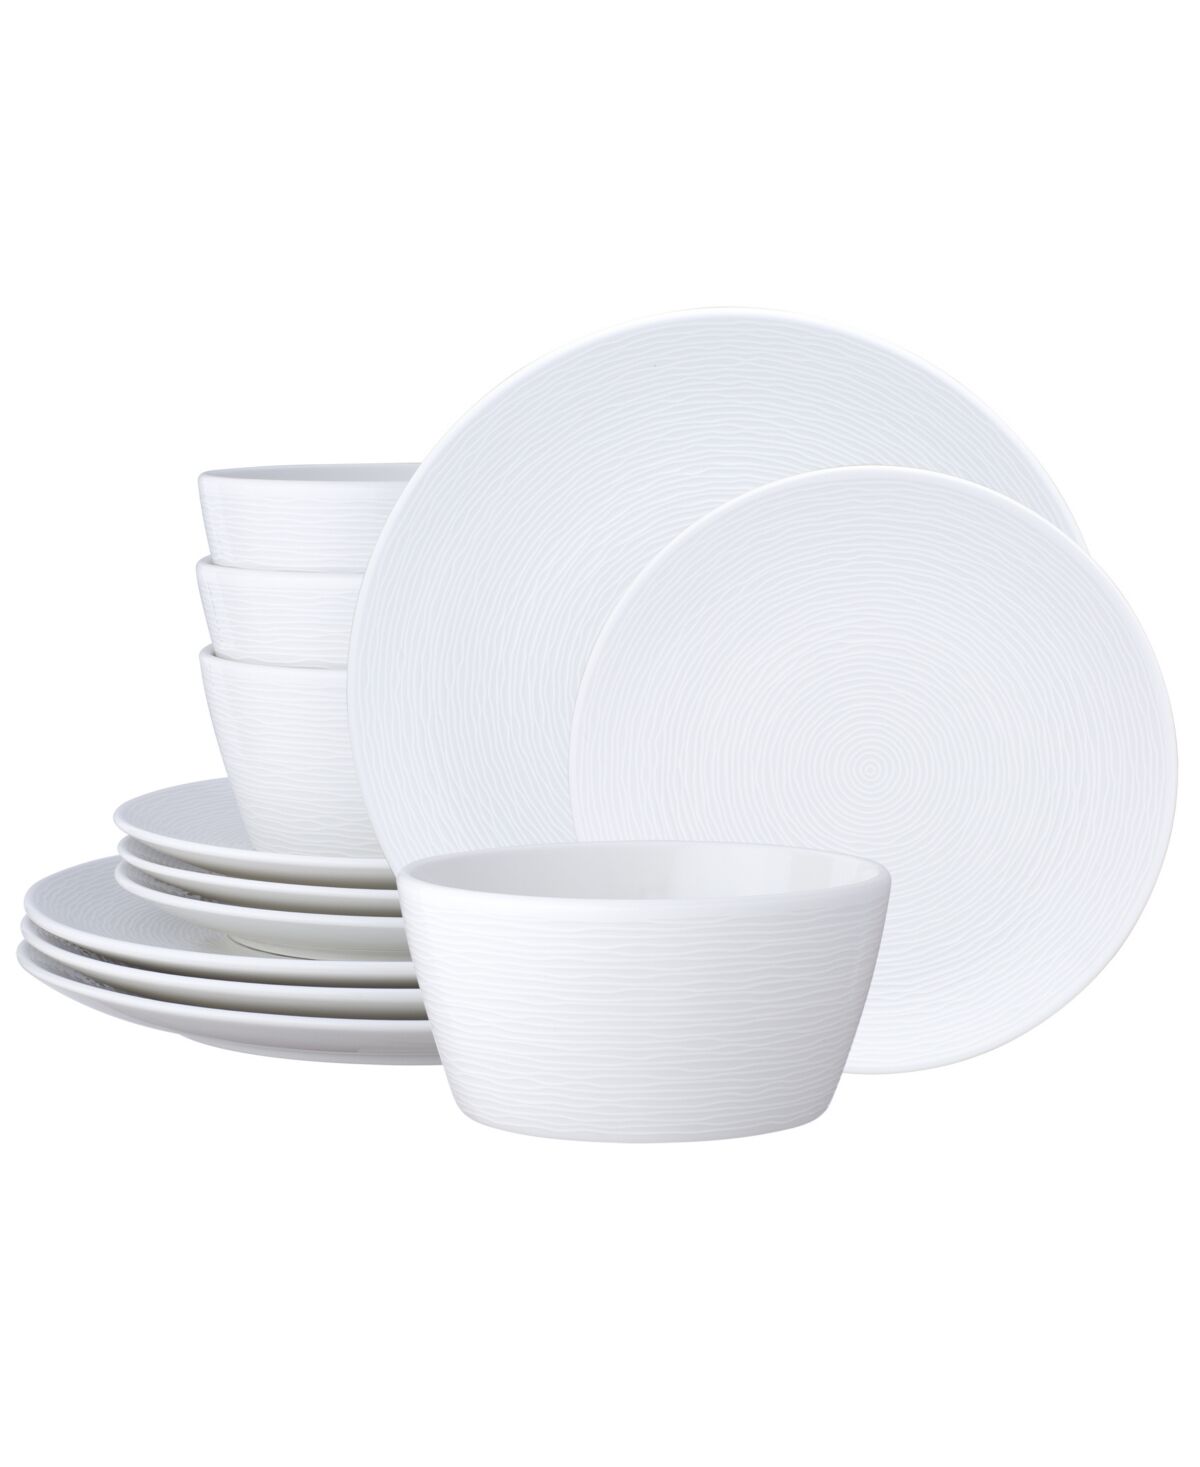 Noritake Swirl Coupe 12 Piece Dinnerware Set, Service For 4 - White